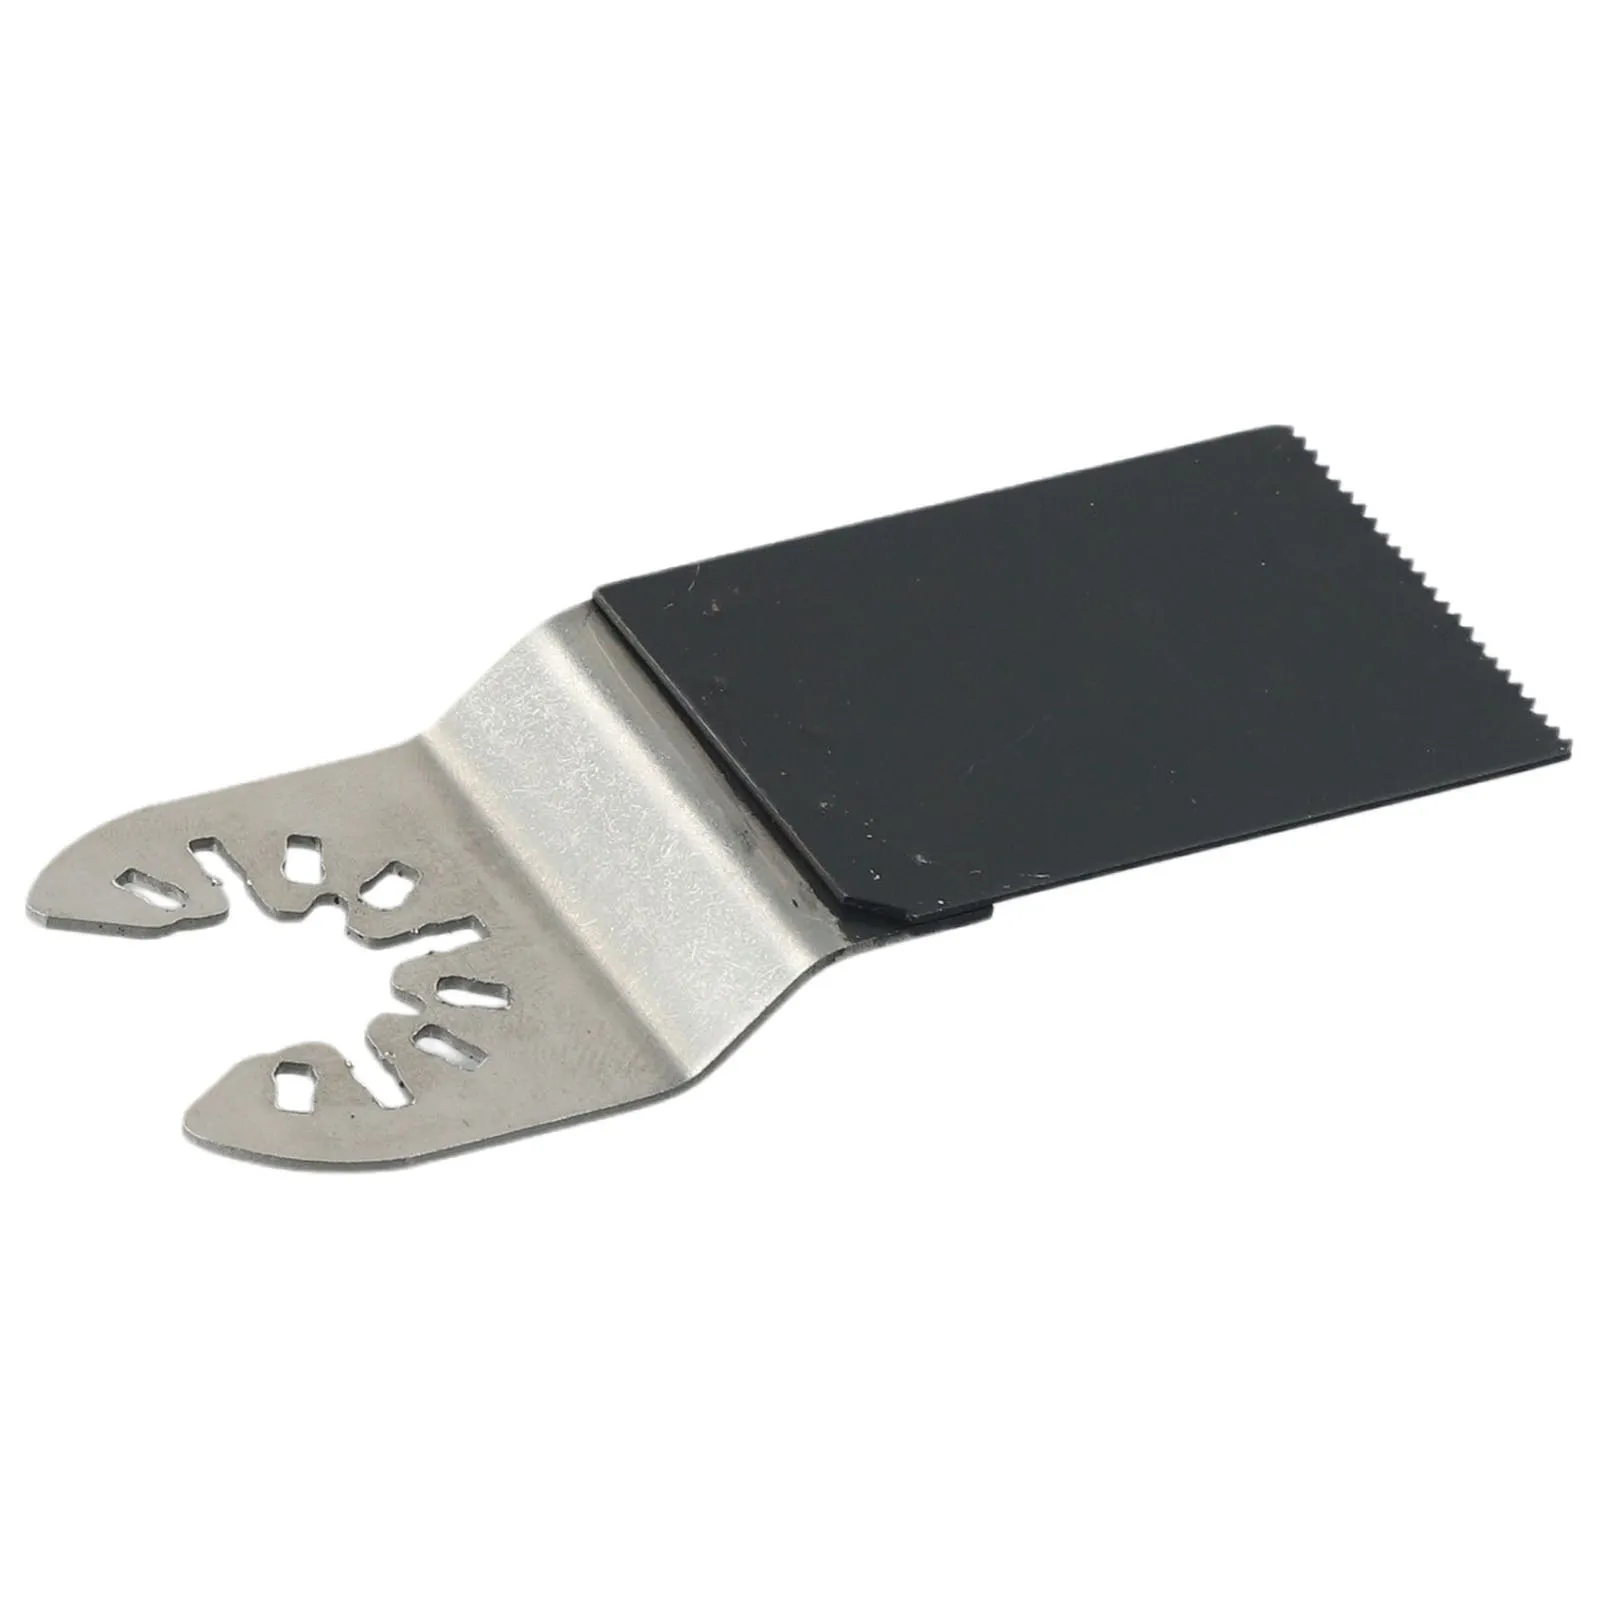 

34mm Universal Bi-metal Oscillating Multi Tool Saw Blade For Metal Wood Cutting Discs For Renovator Power Tool Parts